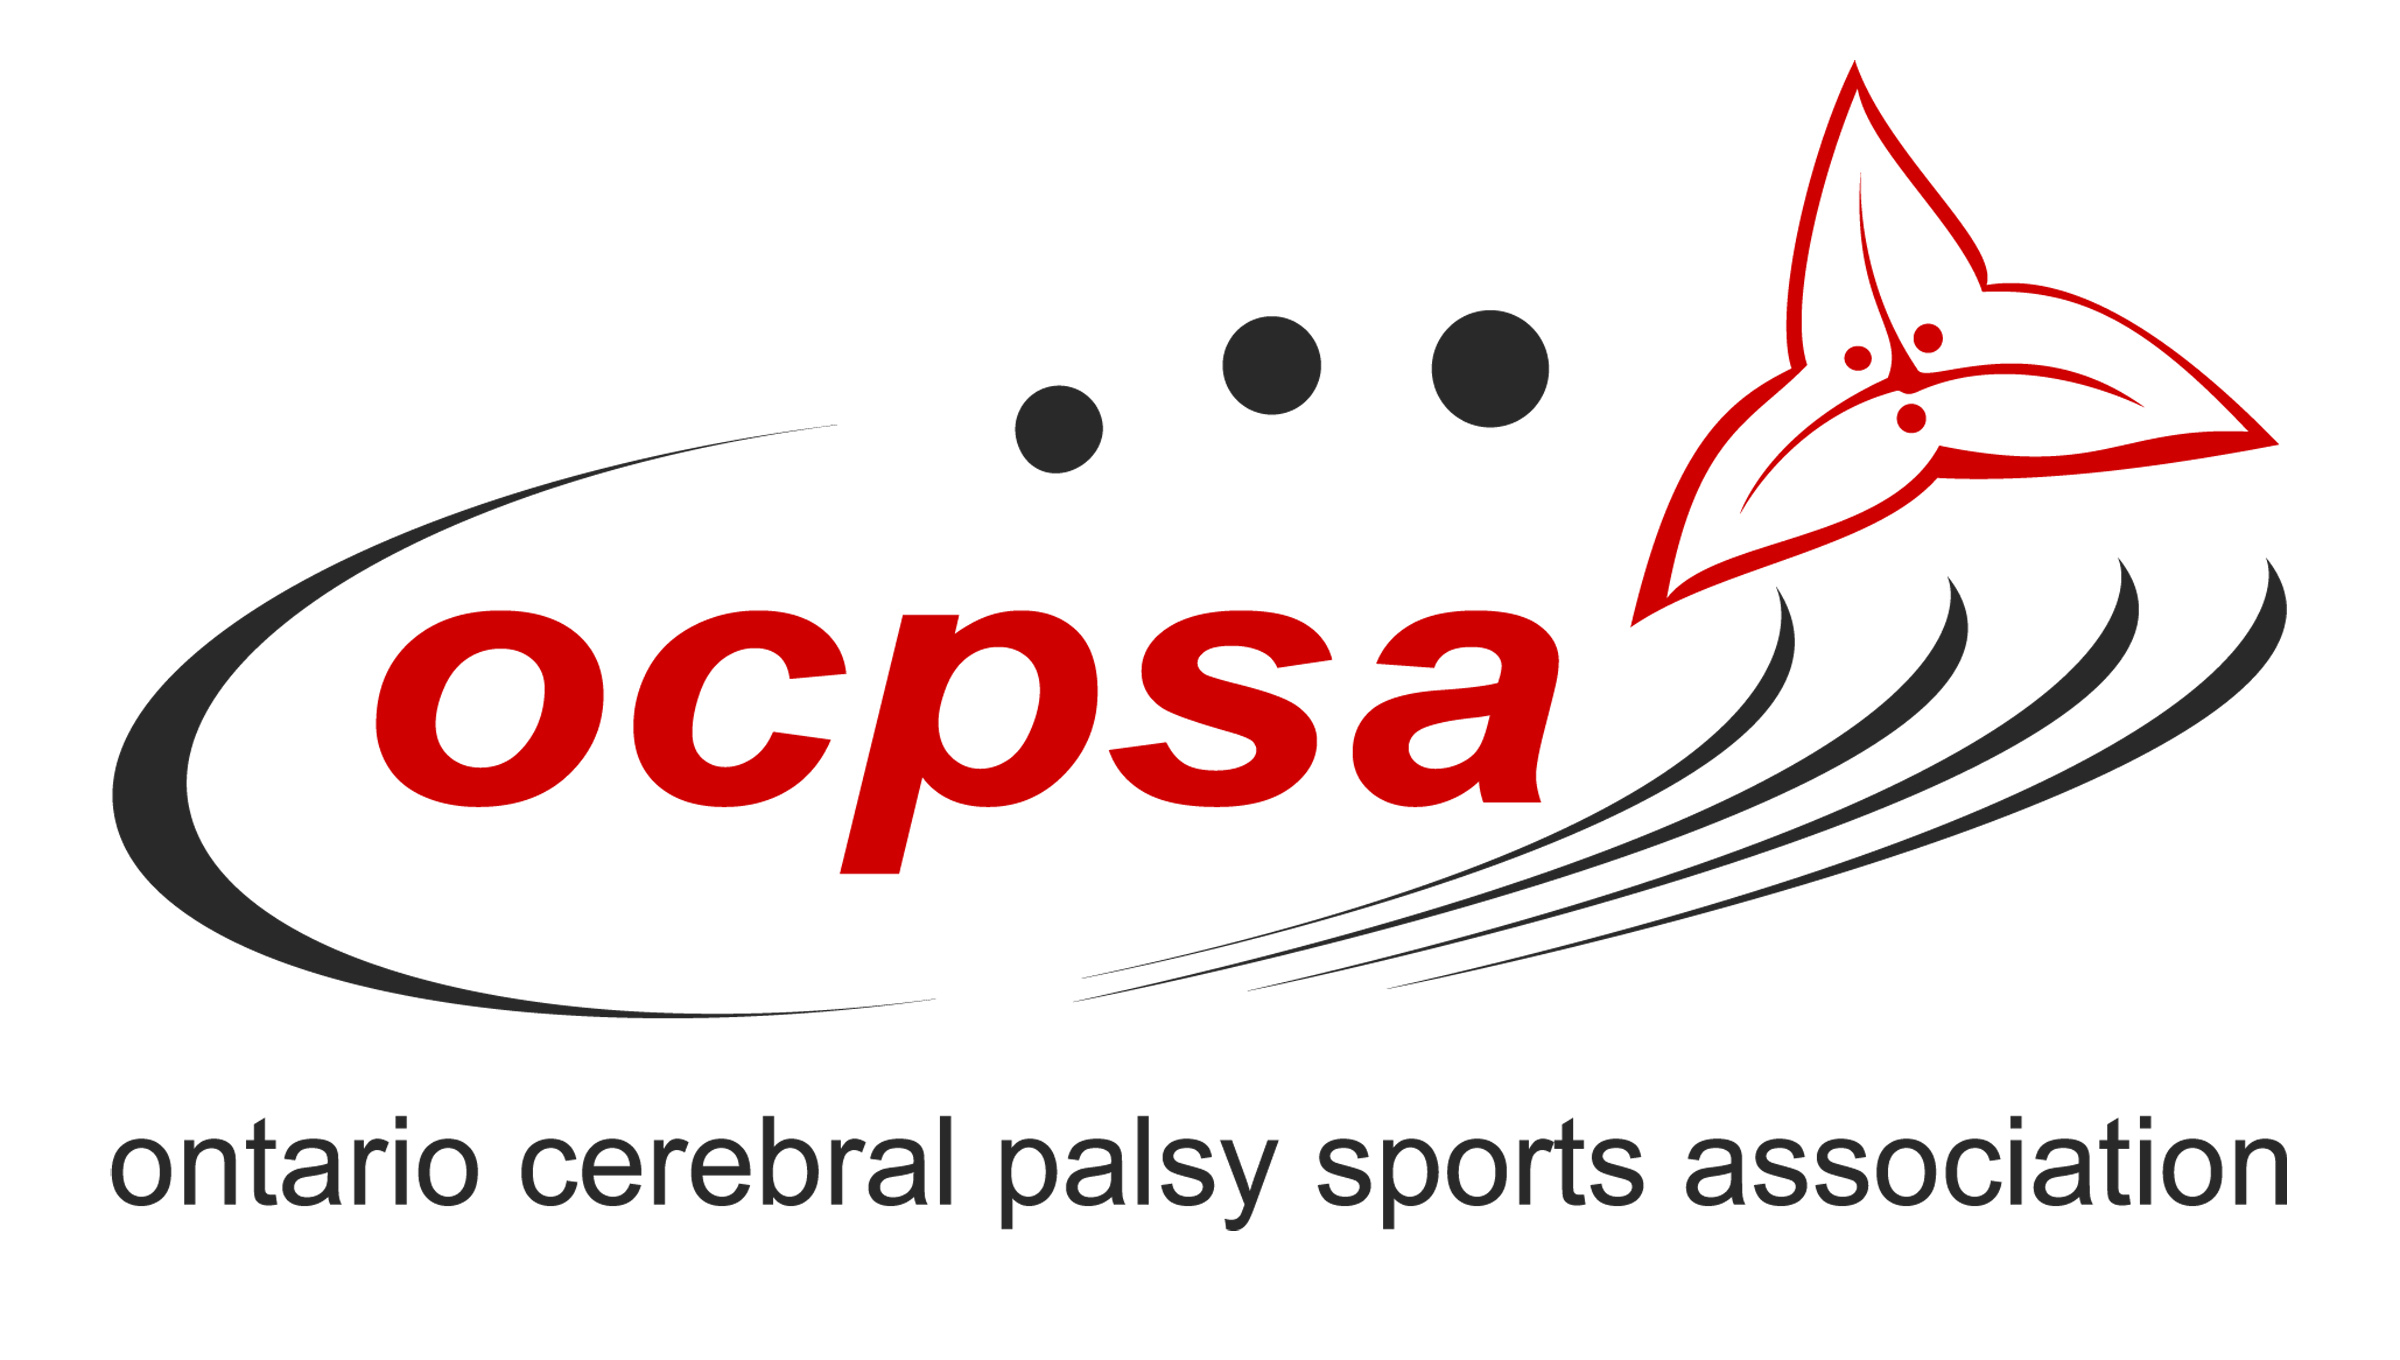 Ontario Cerebral Palsy Sports Association logo